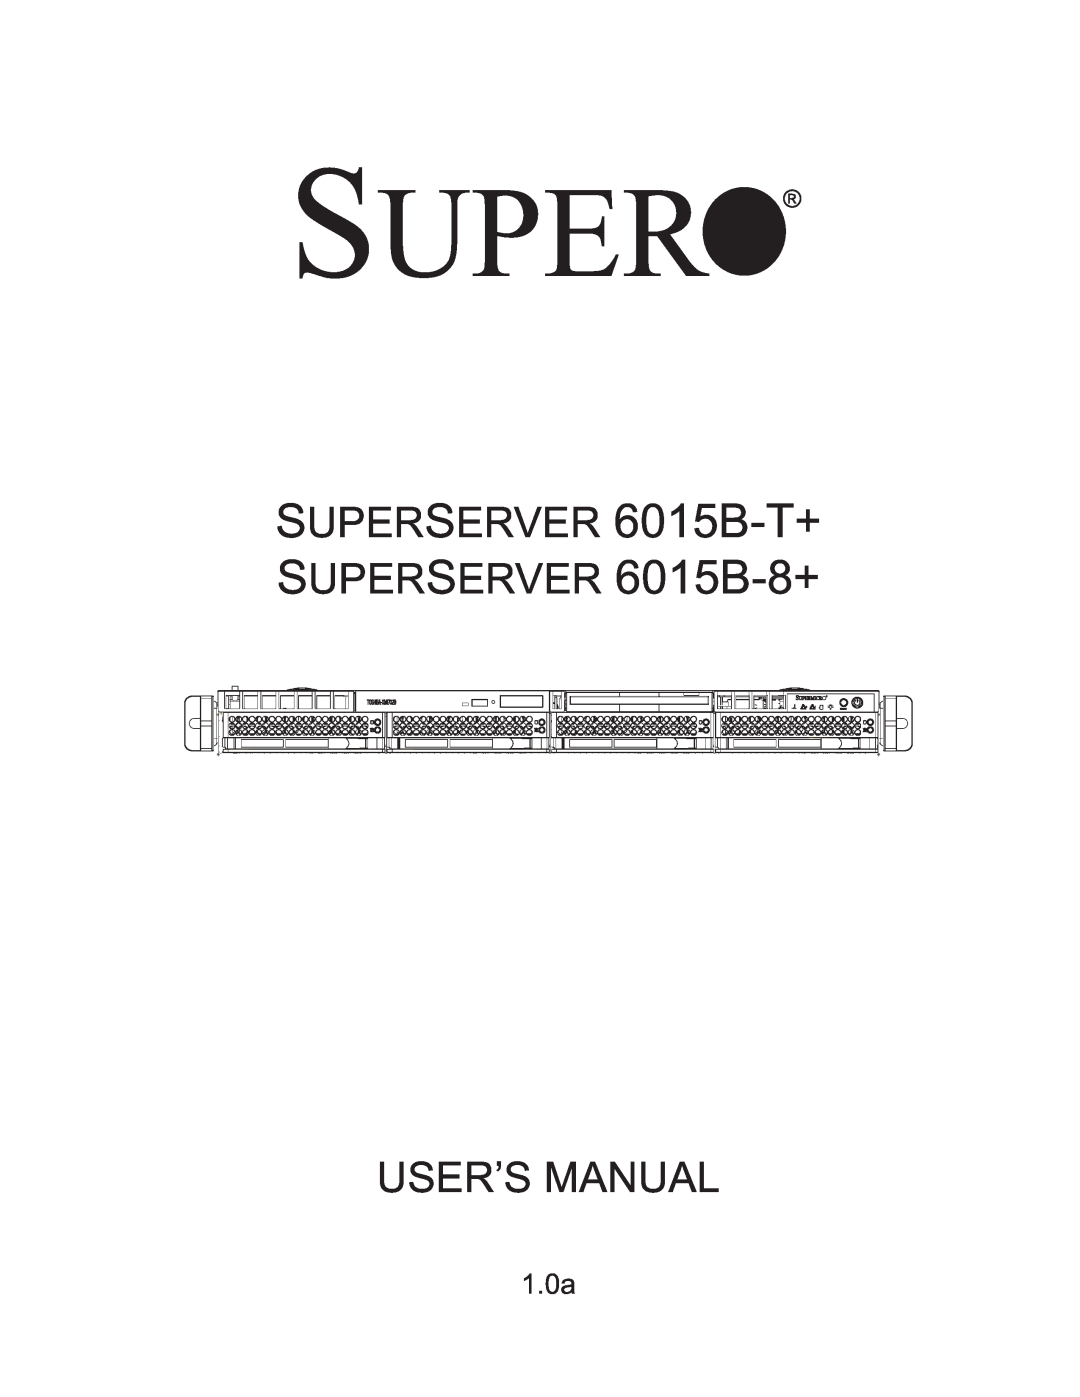 SUPER MICRO Computer manual 1.0a, Super, SUPERSERVER 6015B-T+ SUPERSERVER 6015B-8+, User’S Manual 